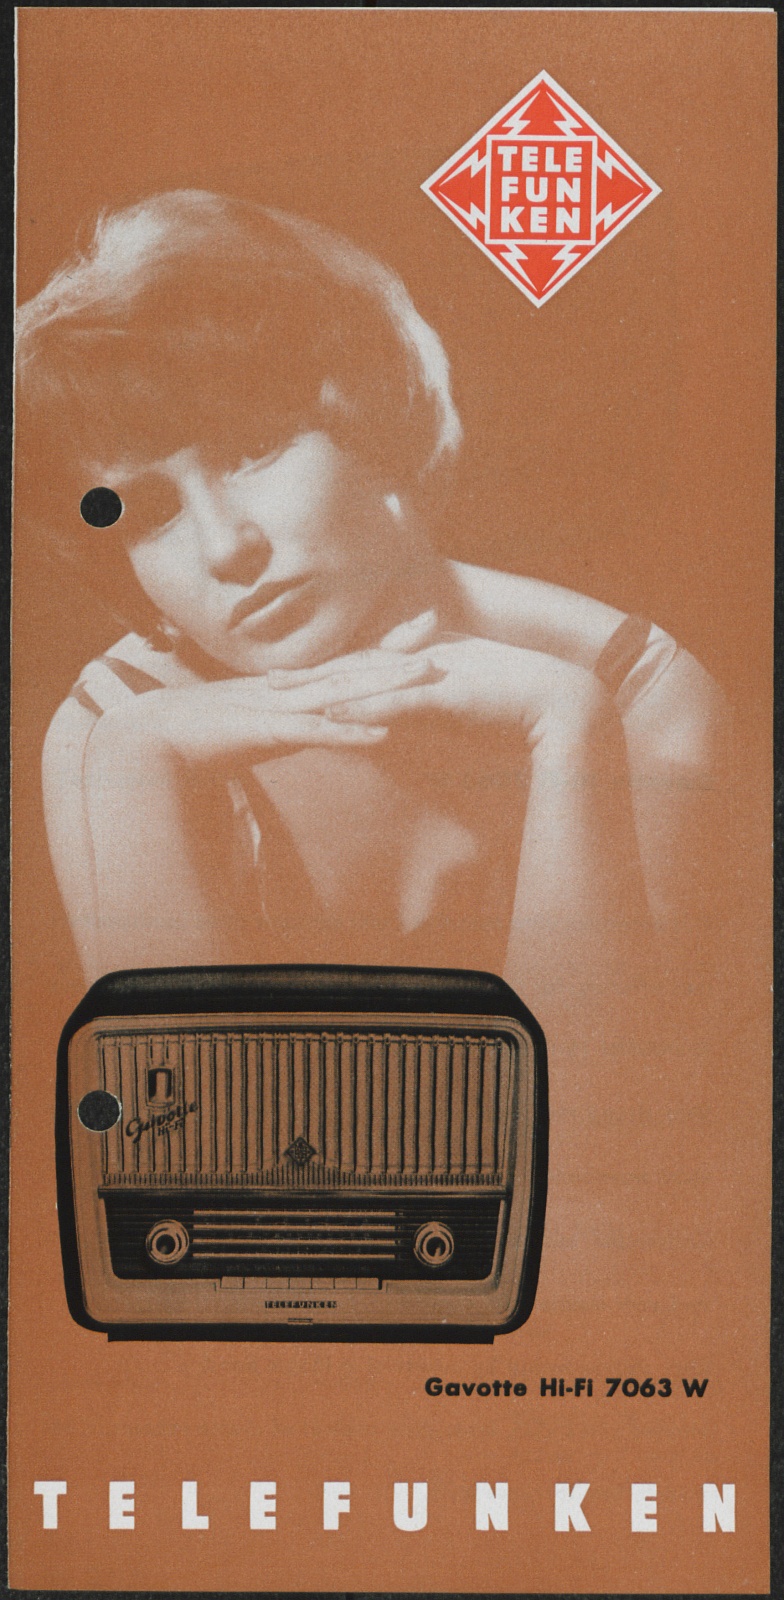 Werbeprospekt: Telefunken Gavotte Hi-Fi 7063 W (Stiftung Deutsches Technikmuseum Berlin CC0)